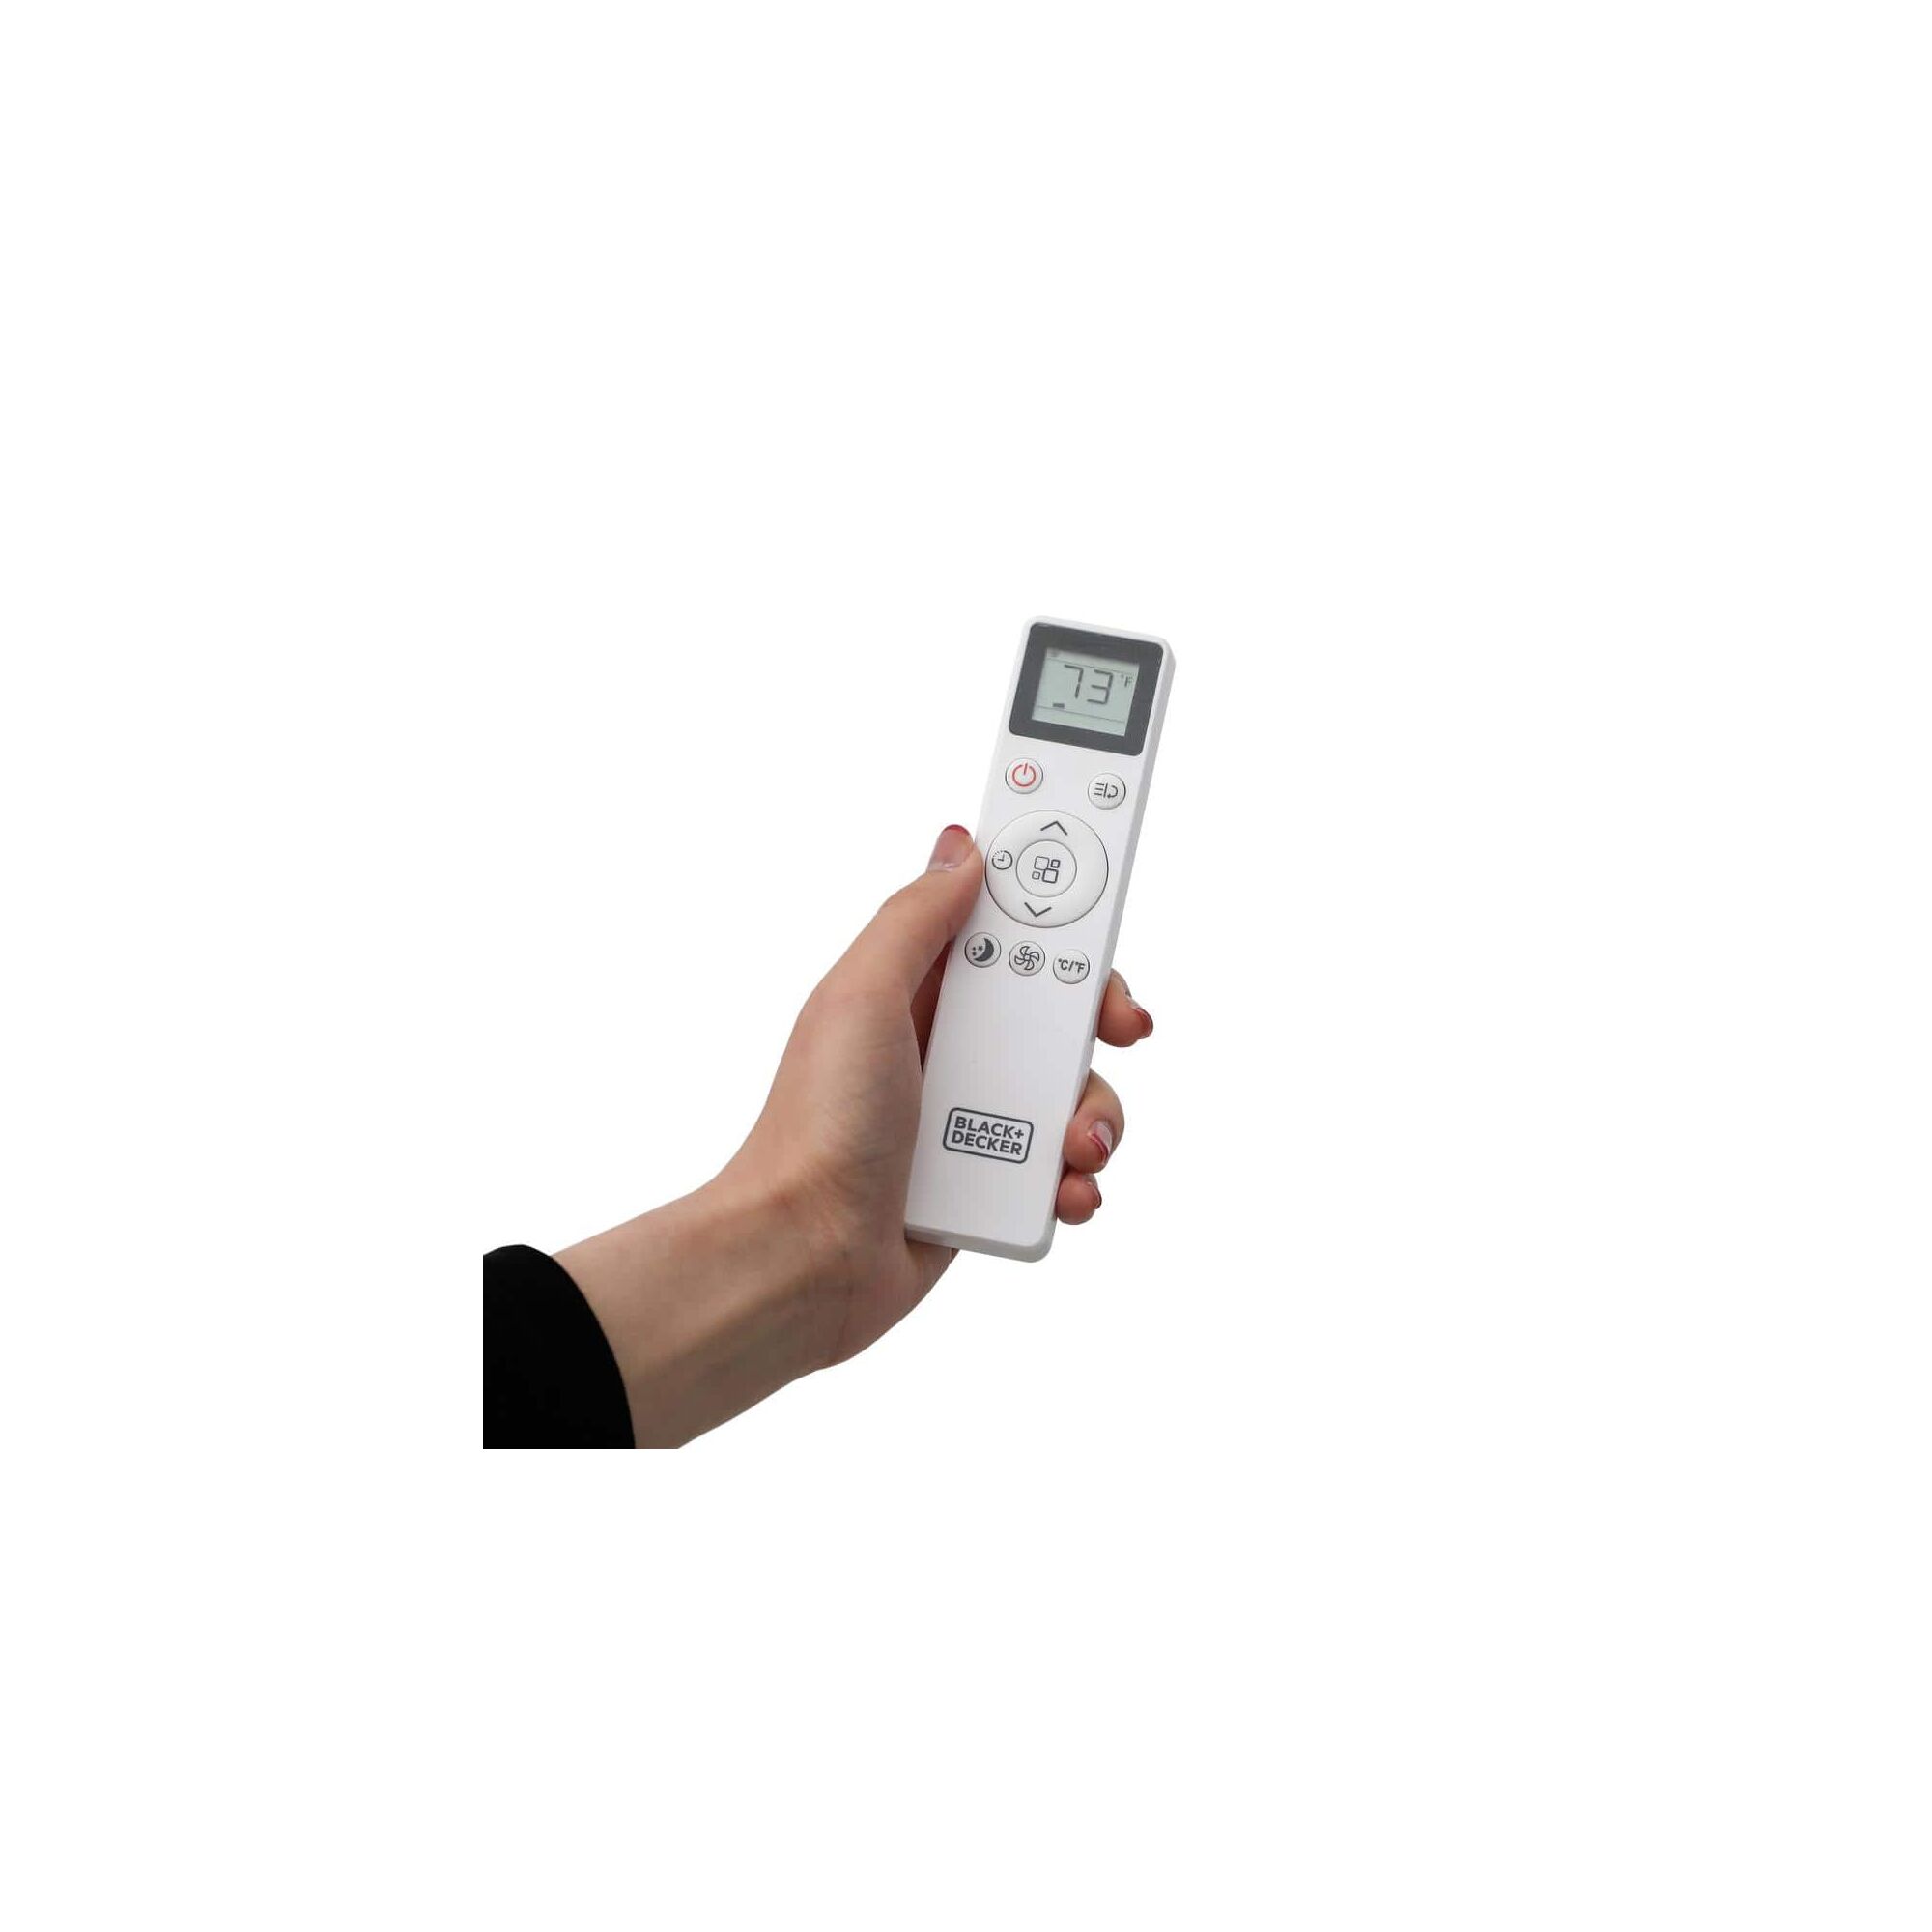 Remote control for the BLACK+DECKER portable air conditioner